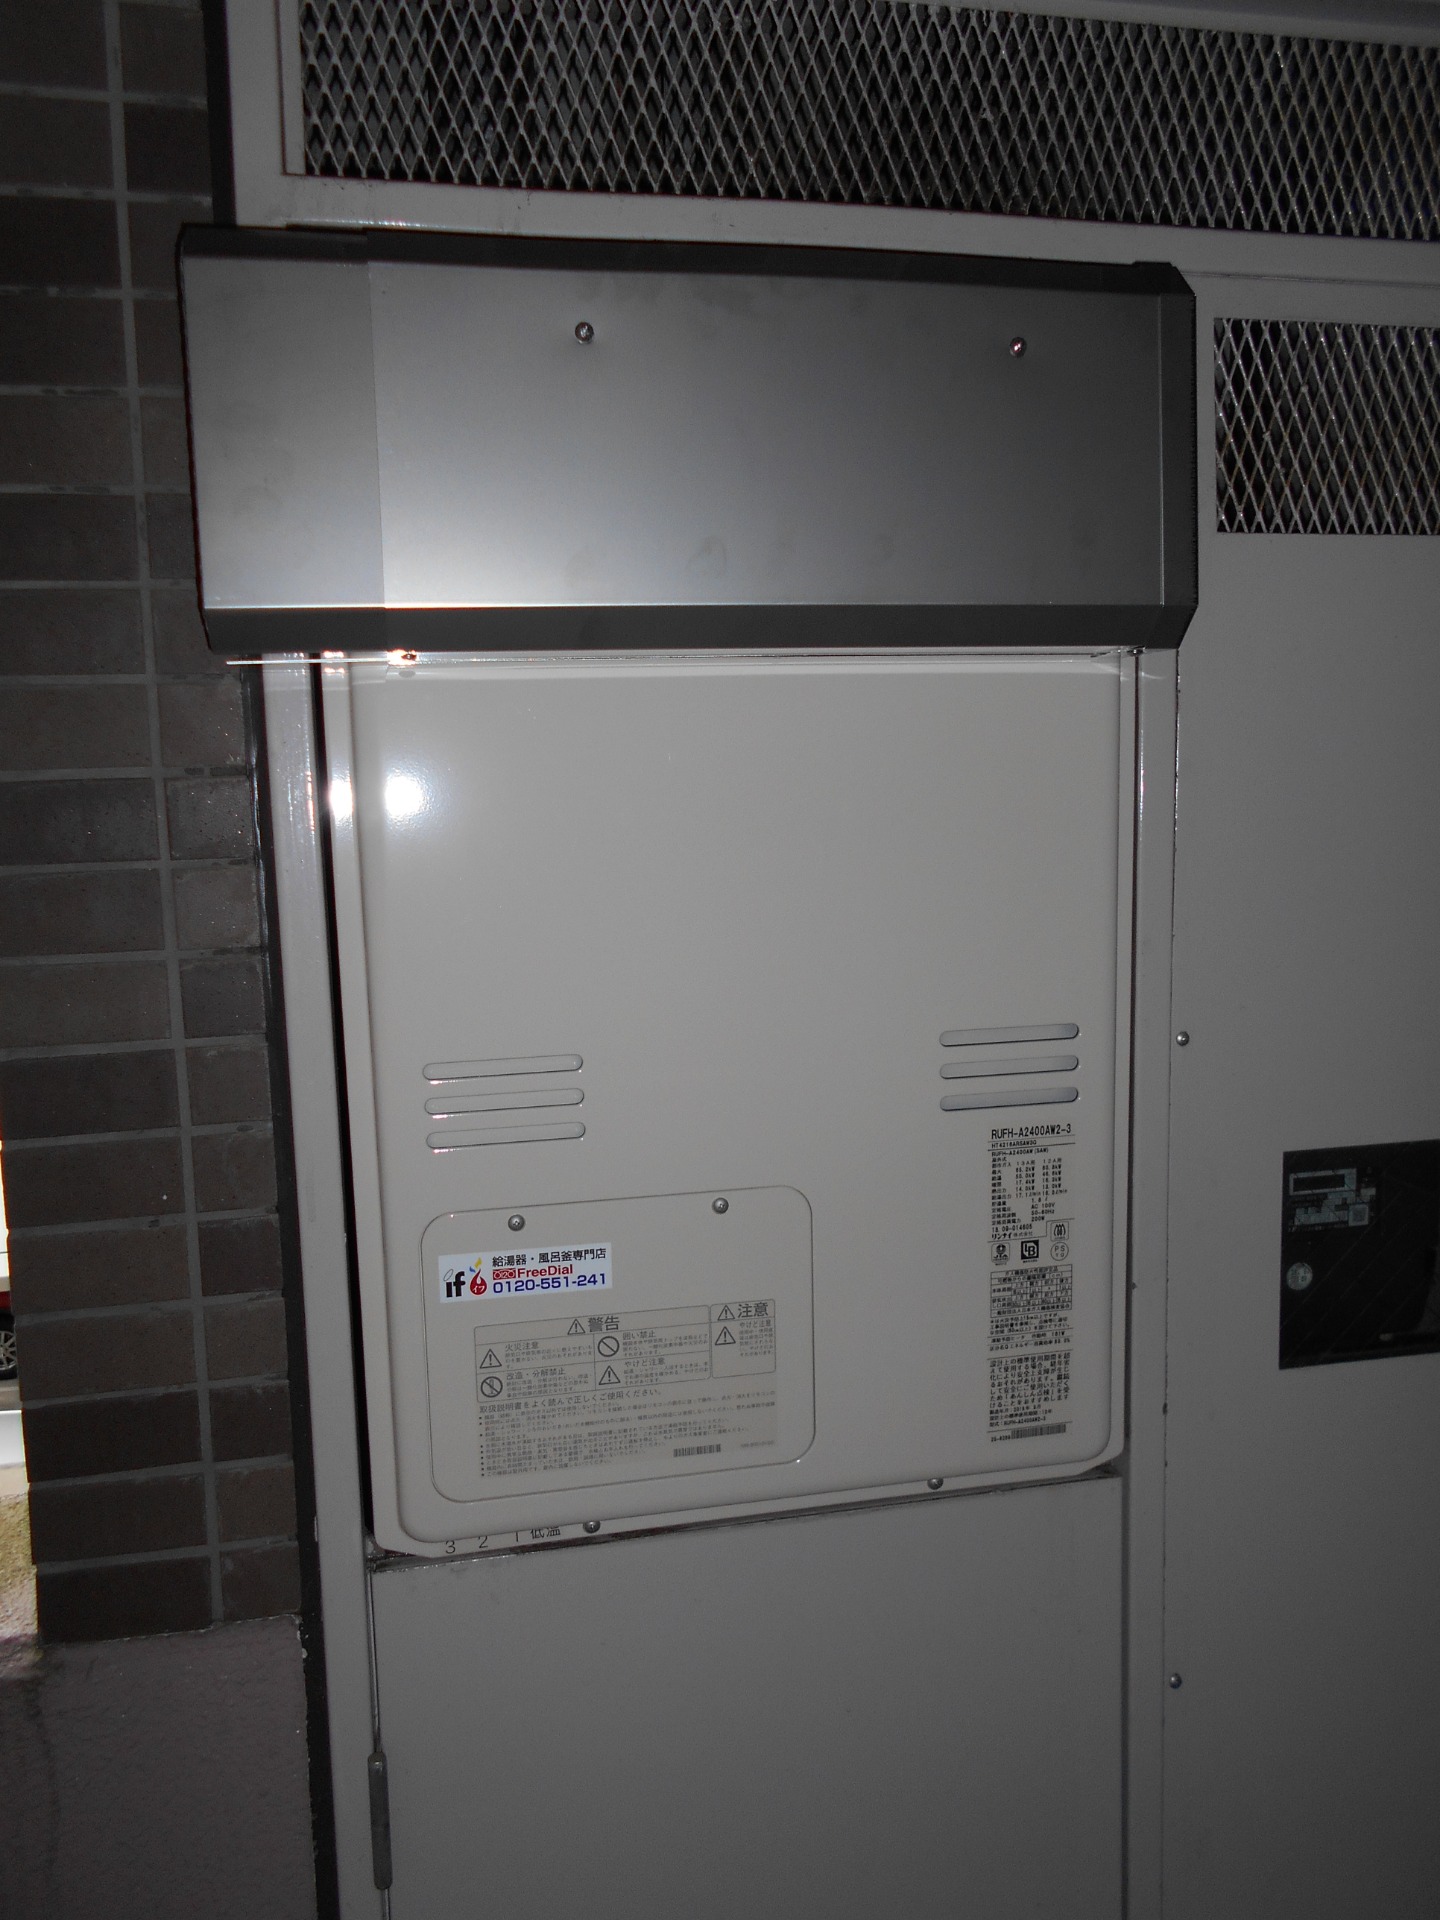 RUFH-SA2400AT2-6(A) リンナイ ガス給湯暖房用熱源機 24号 フルオート PS扉内設置型 スリムタイプ 